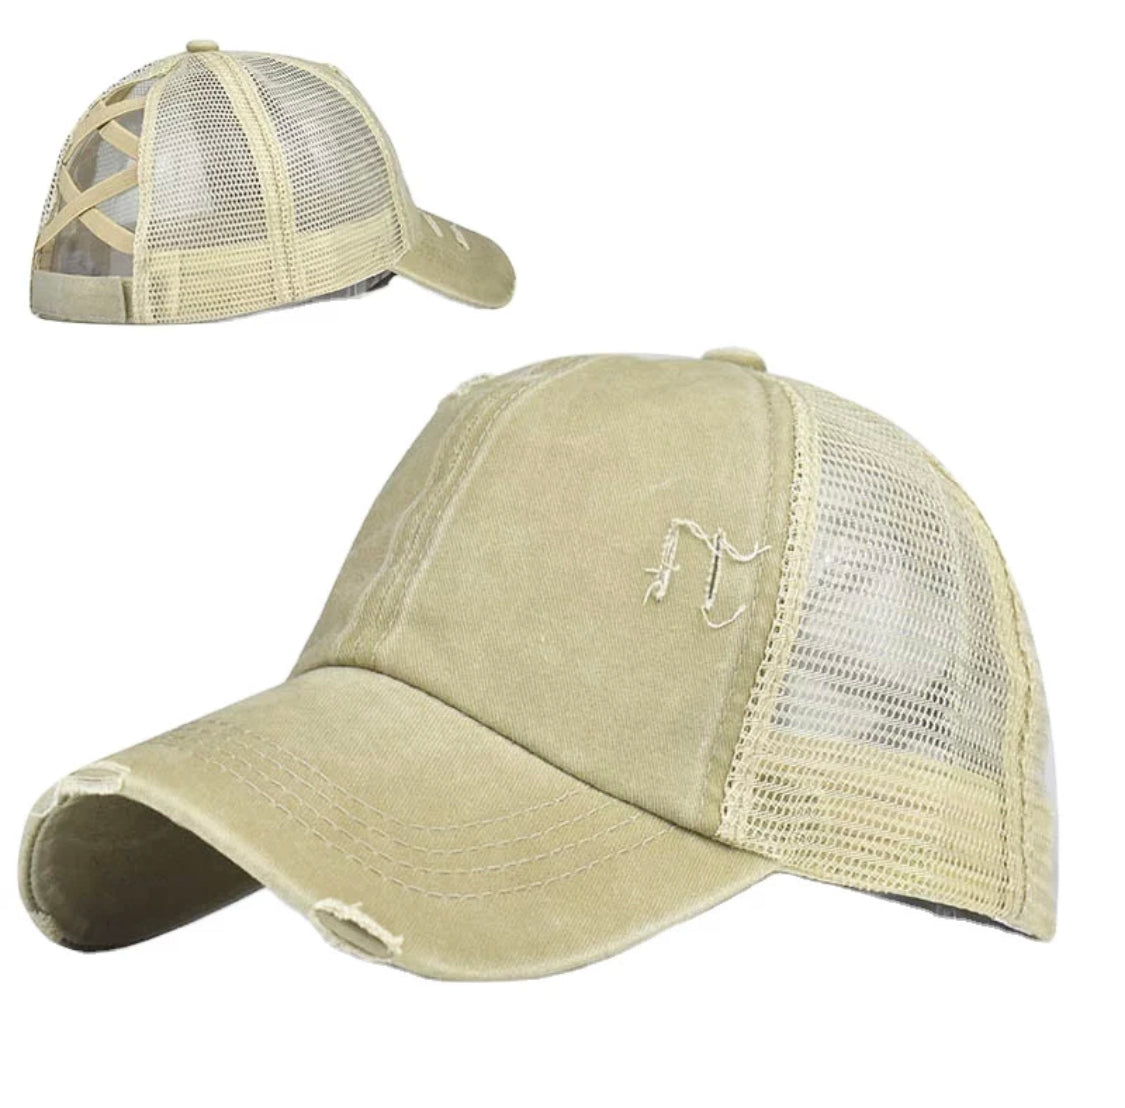 Ponytail Criss Cross Baseball Hat - SOLID